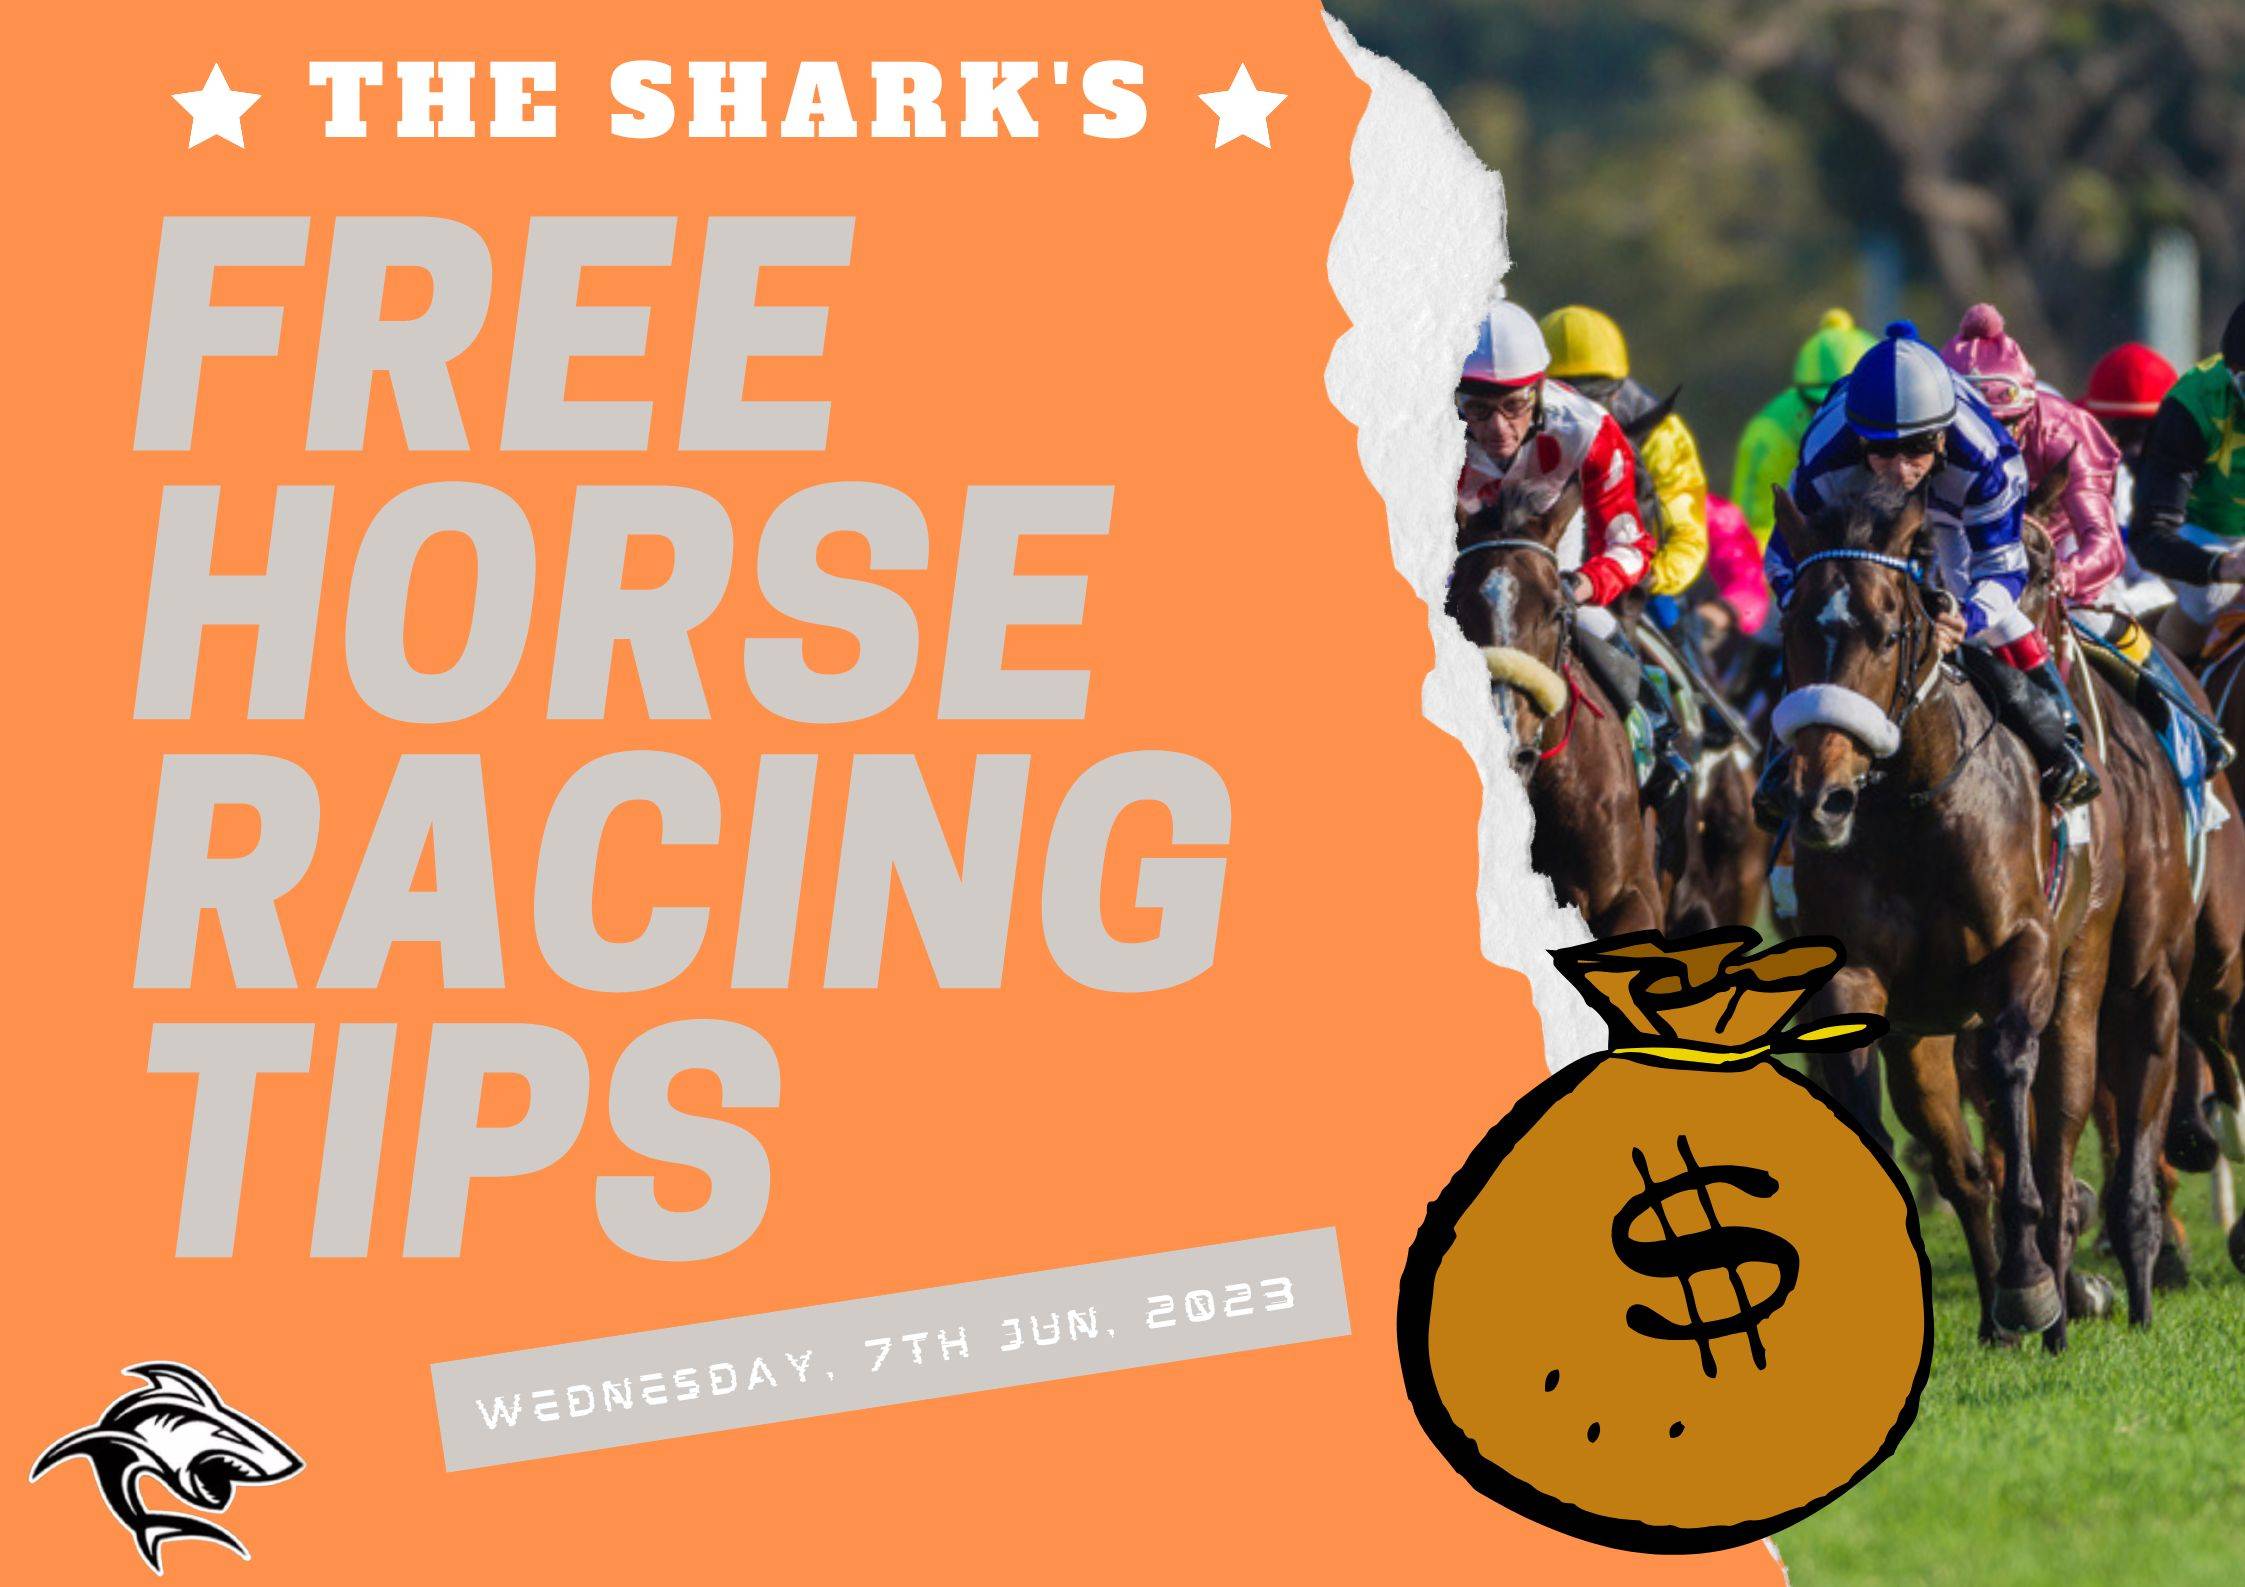 Free Horse Racing Tips - 7th Jun